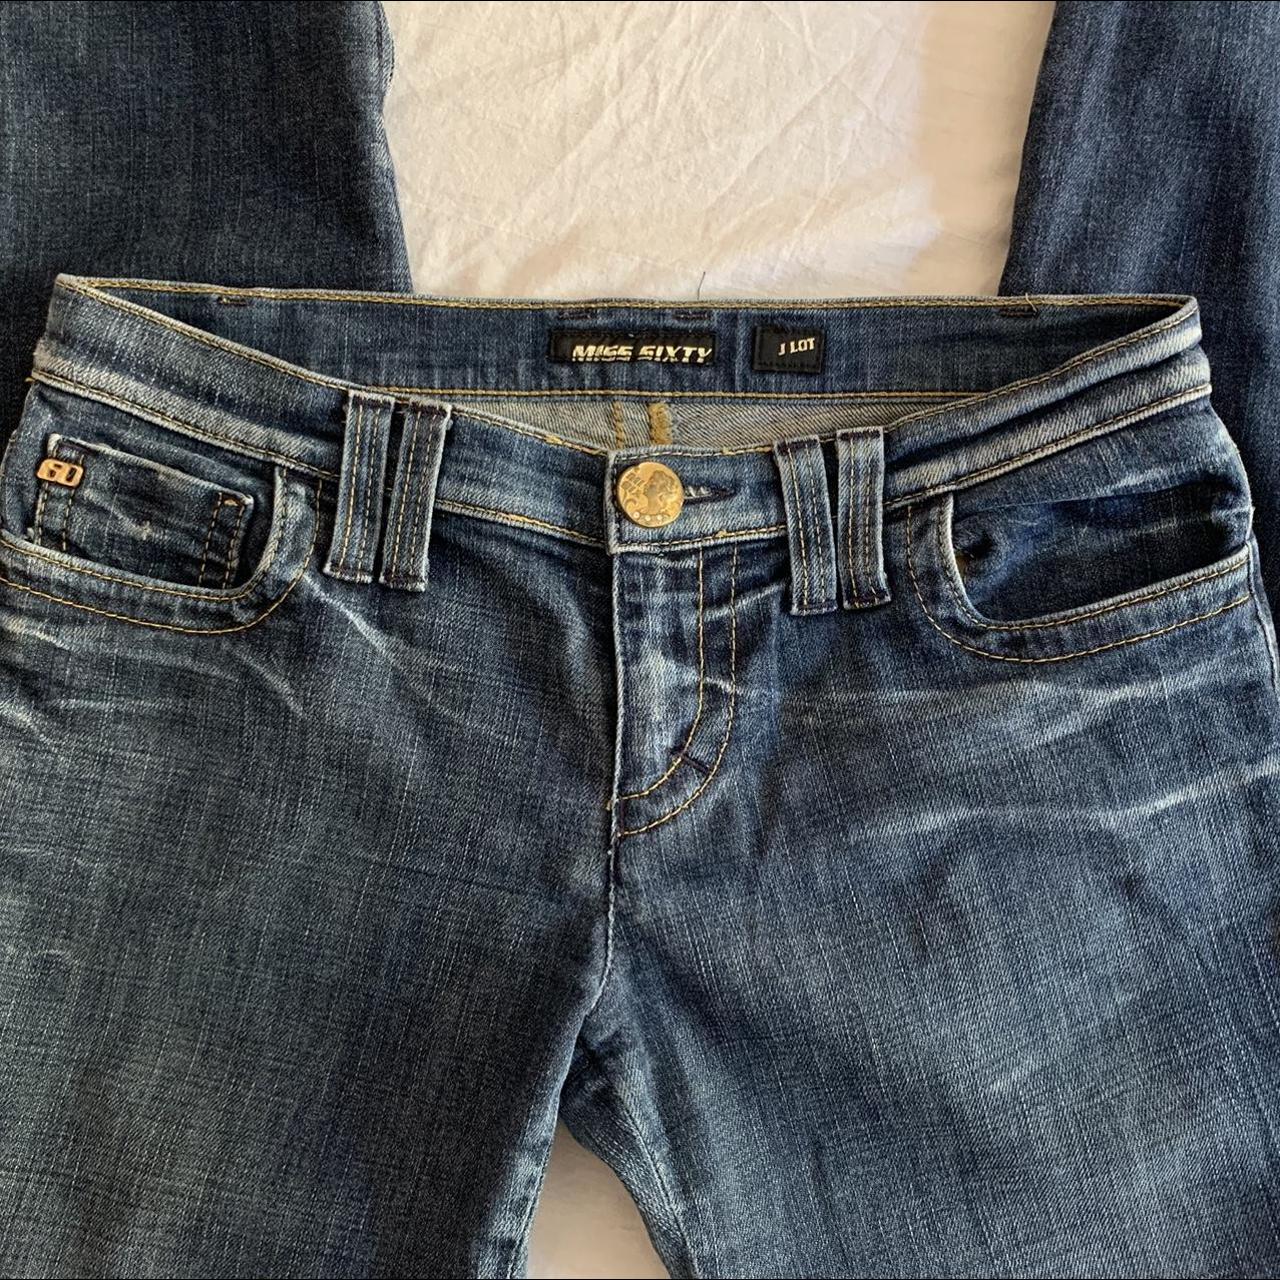 Vintage miss sixty jeans Size 31 Super cute zipper... - Depop